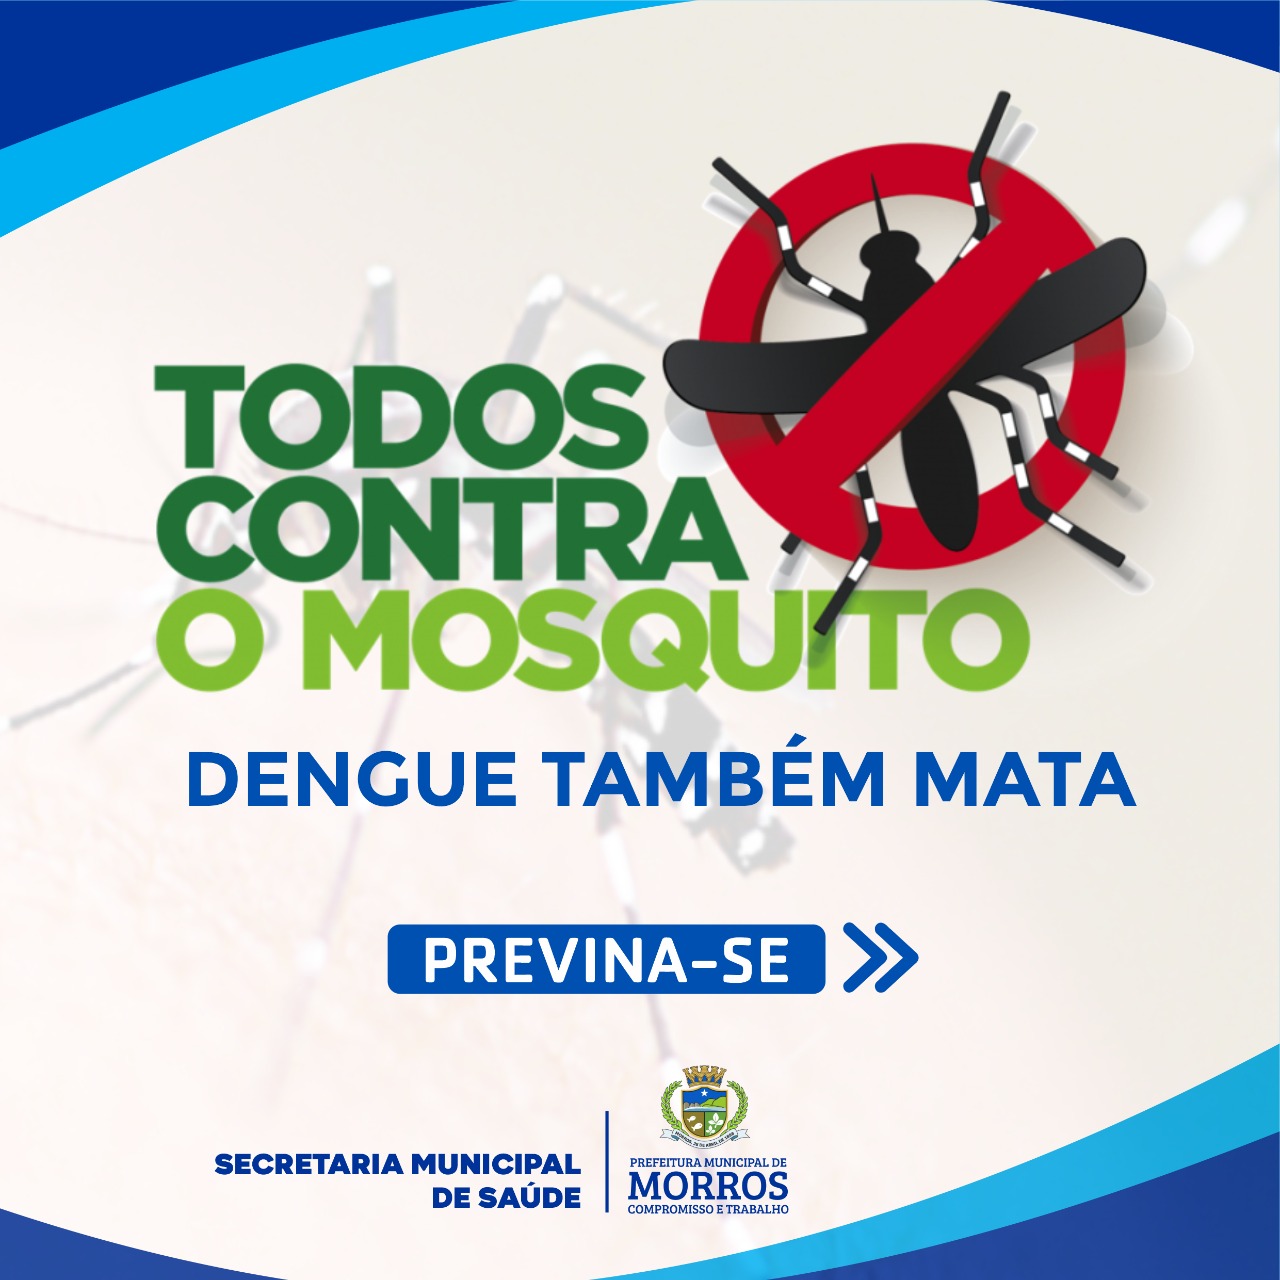 Todos Contra o Mosquito. Dengue Mata!